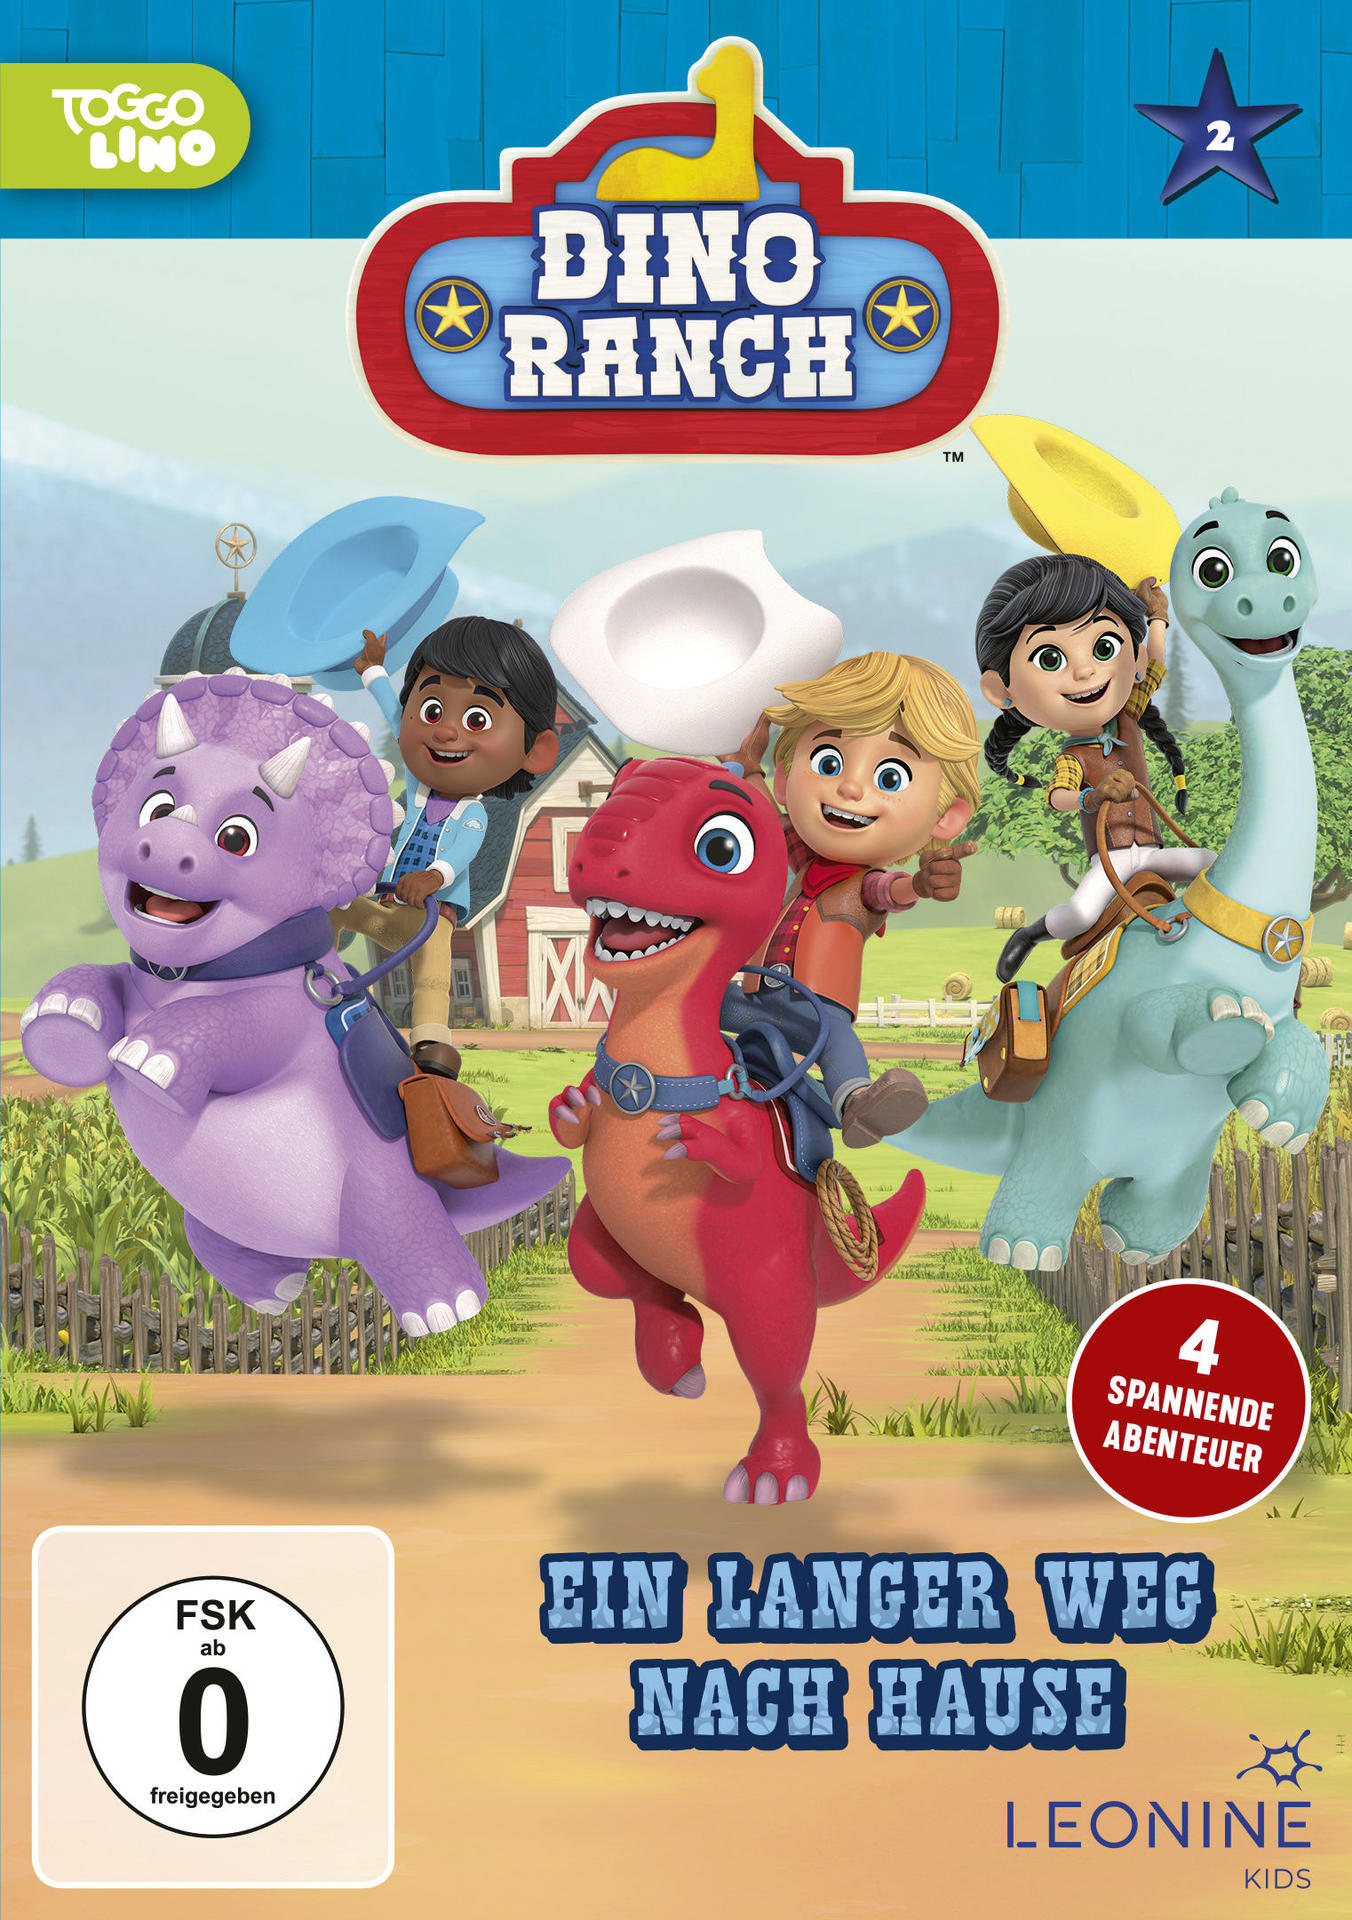 Dino Ranch DVD